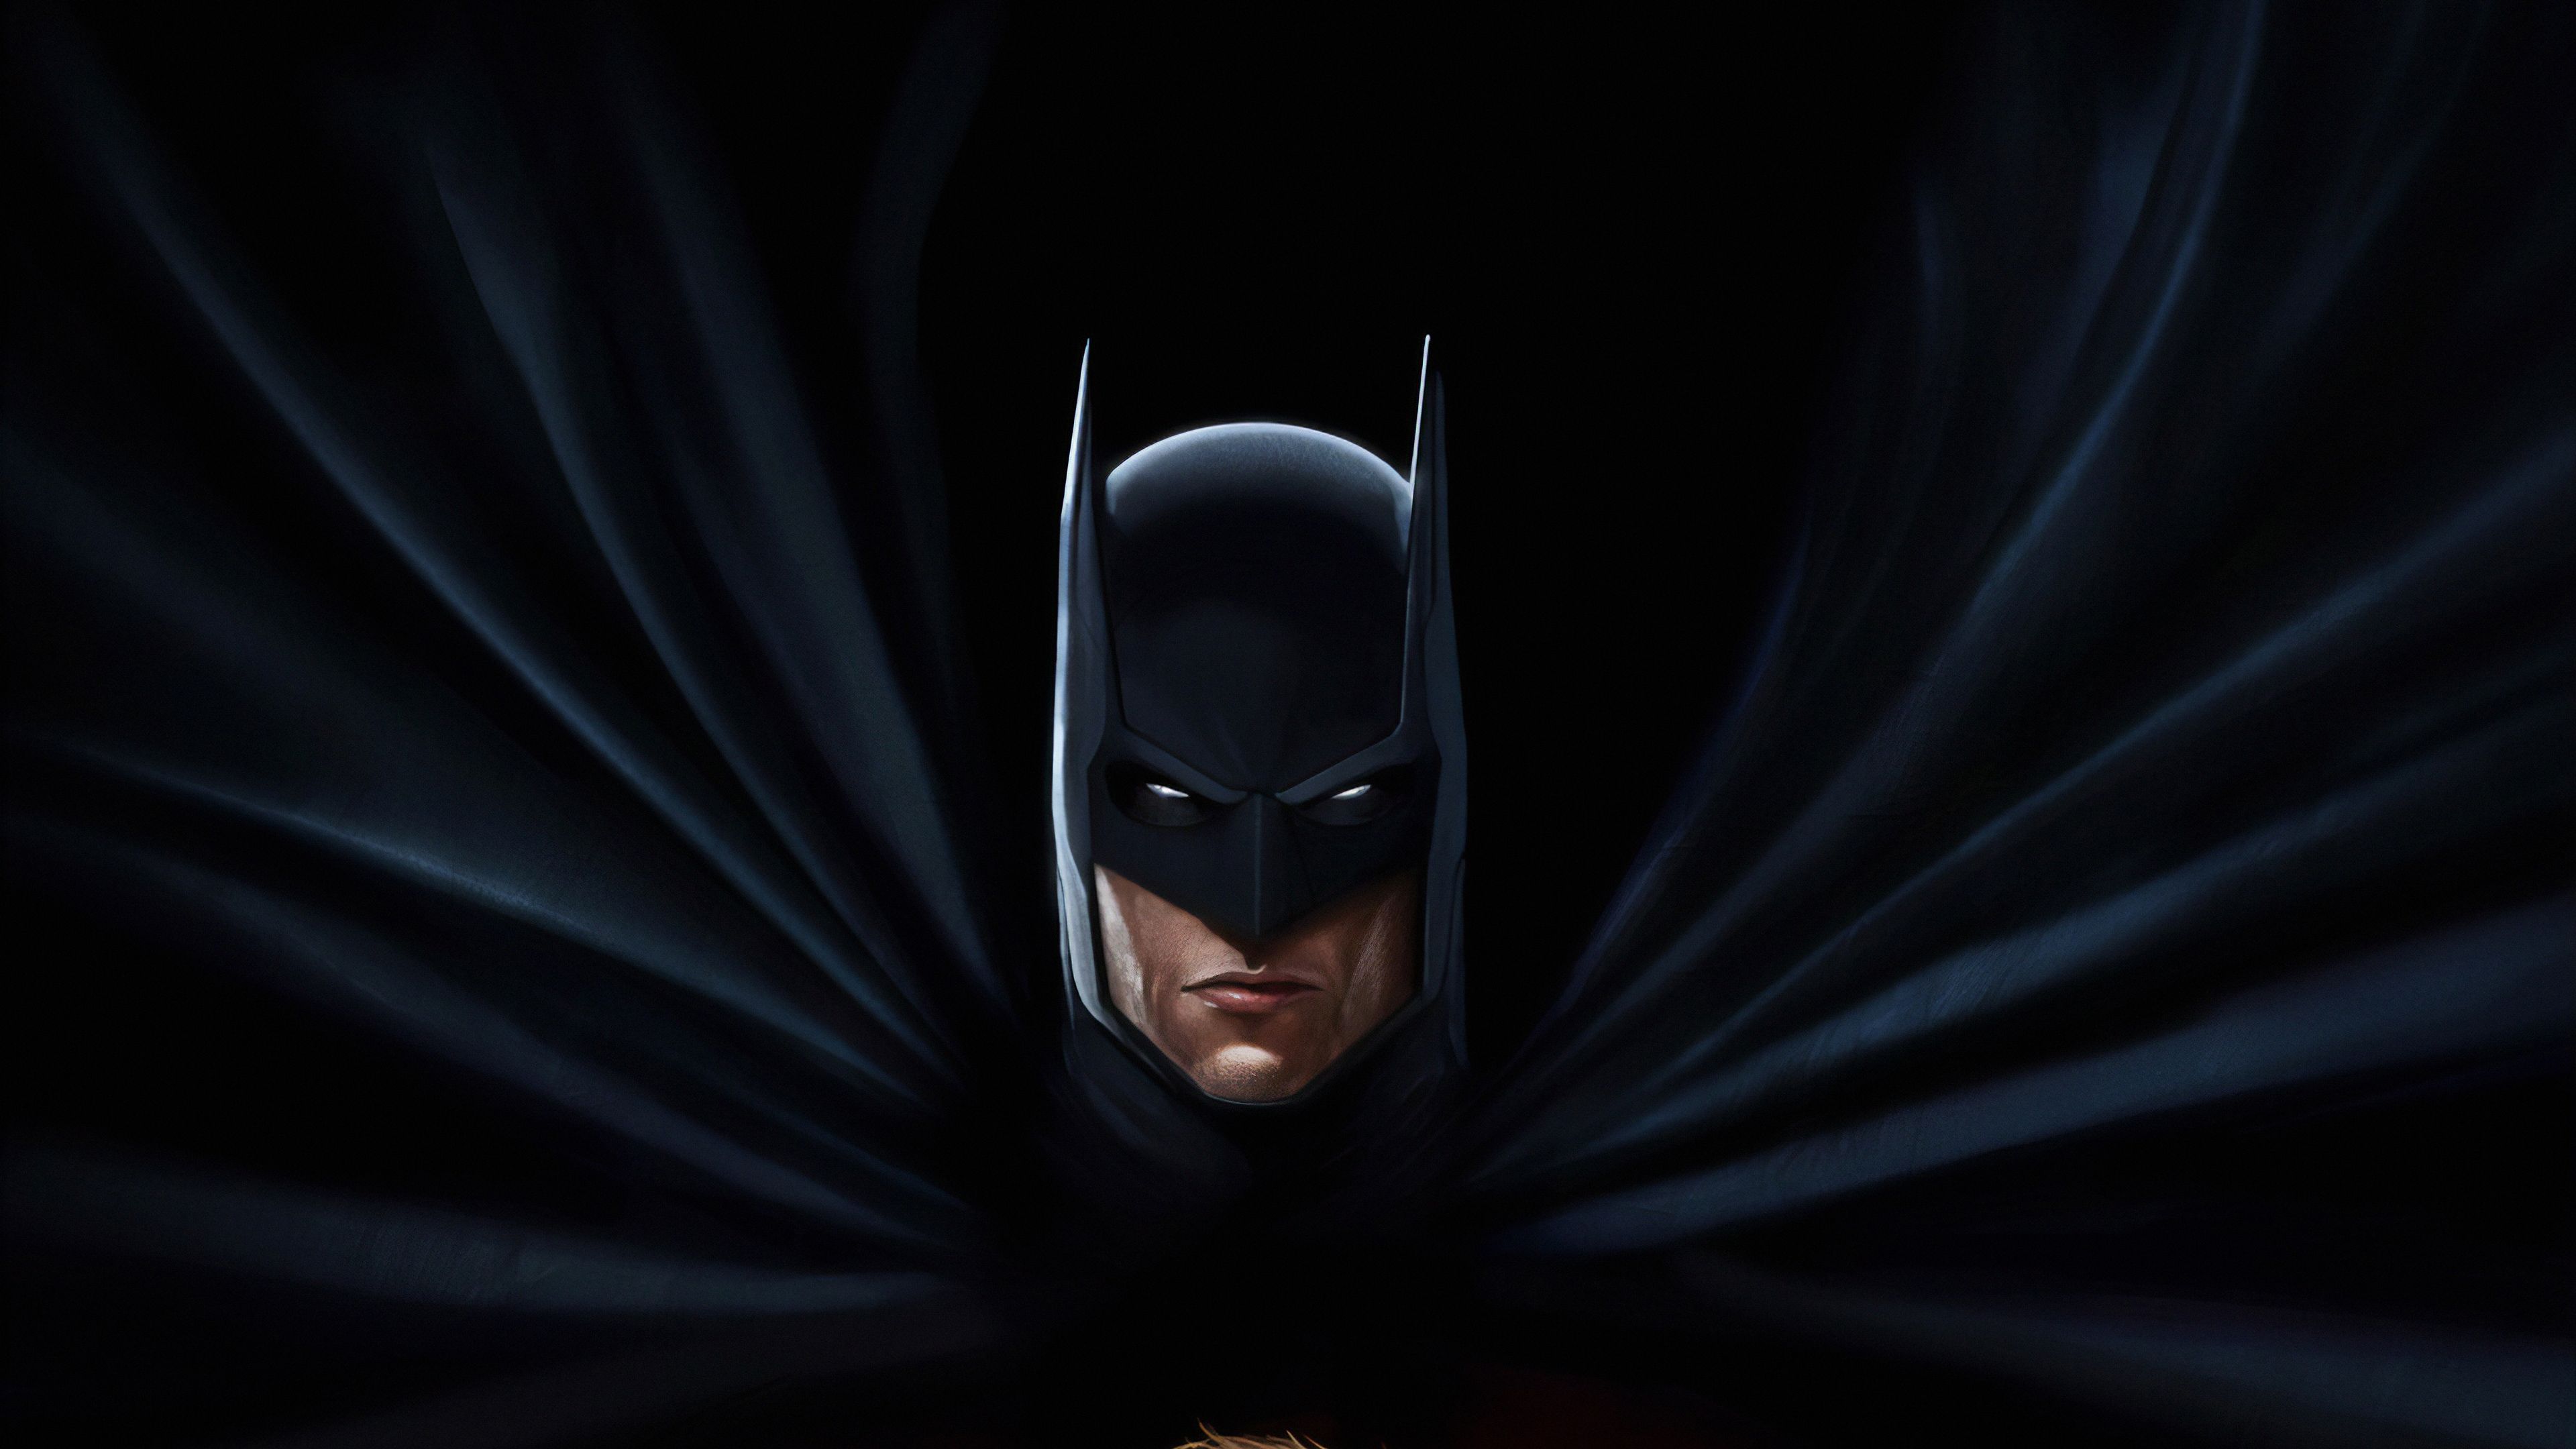 Batman Black Cape, HD Superheroes, 4k Wallpaper, Image, Background, Photo and Picture